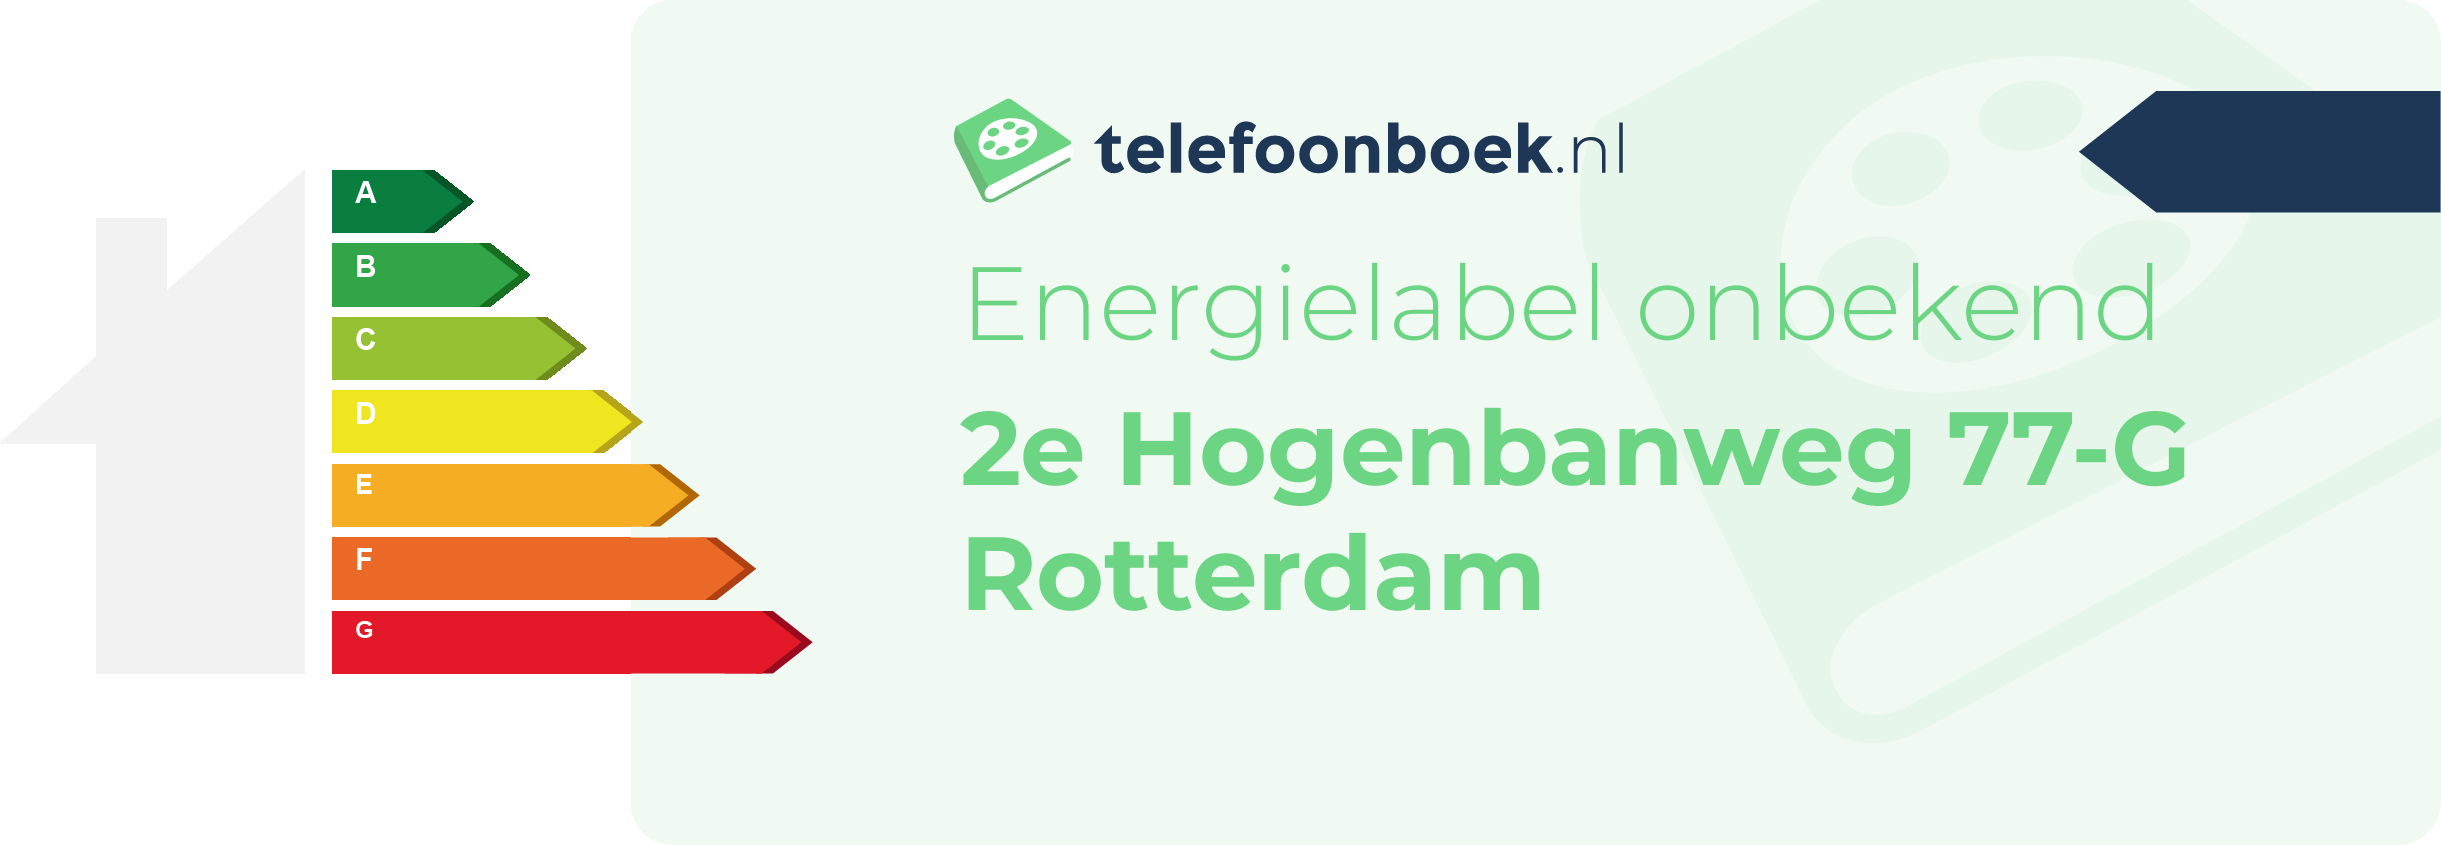 Energielabel 2e Hogenbanweg 77-G Rotterdam